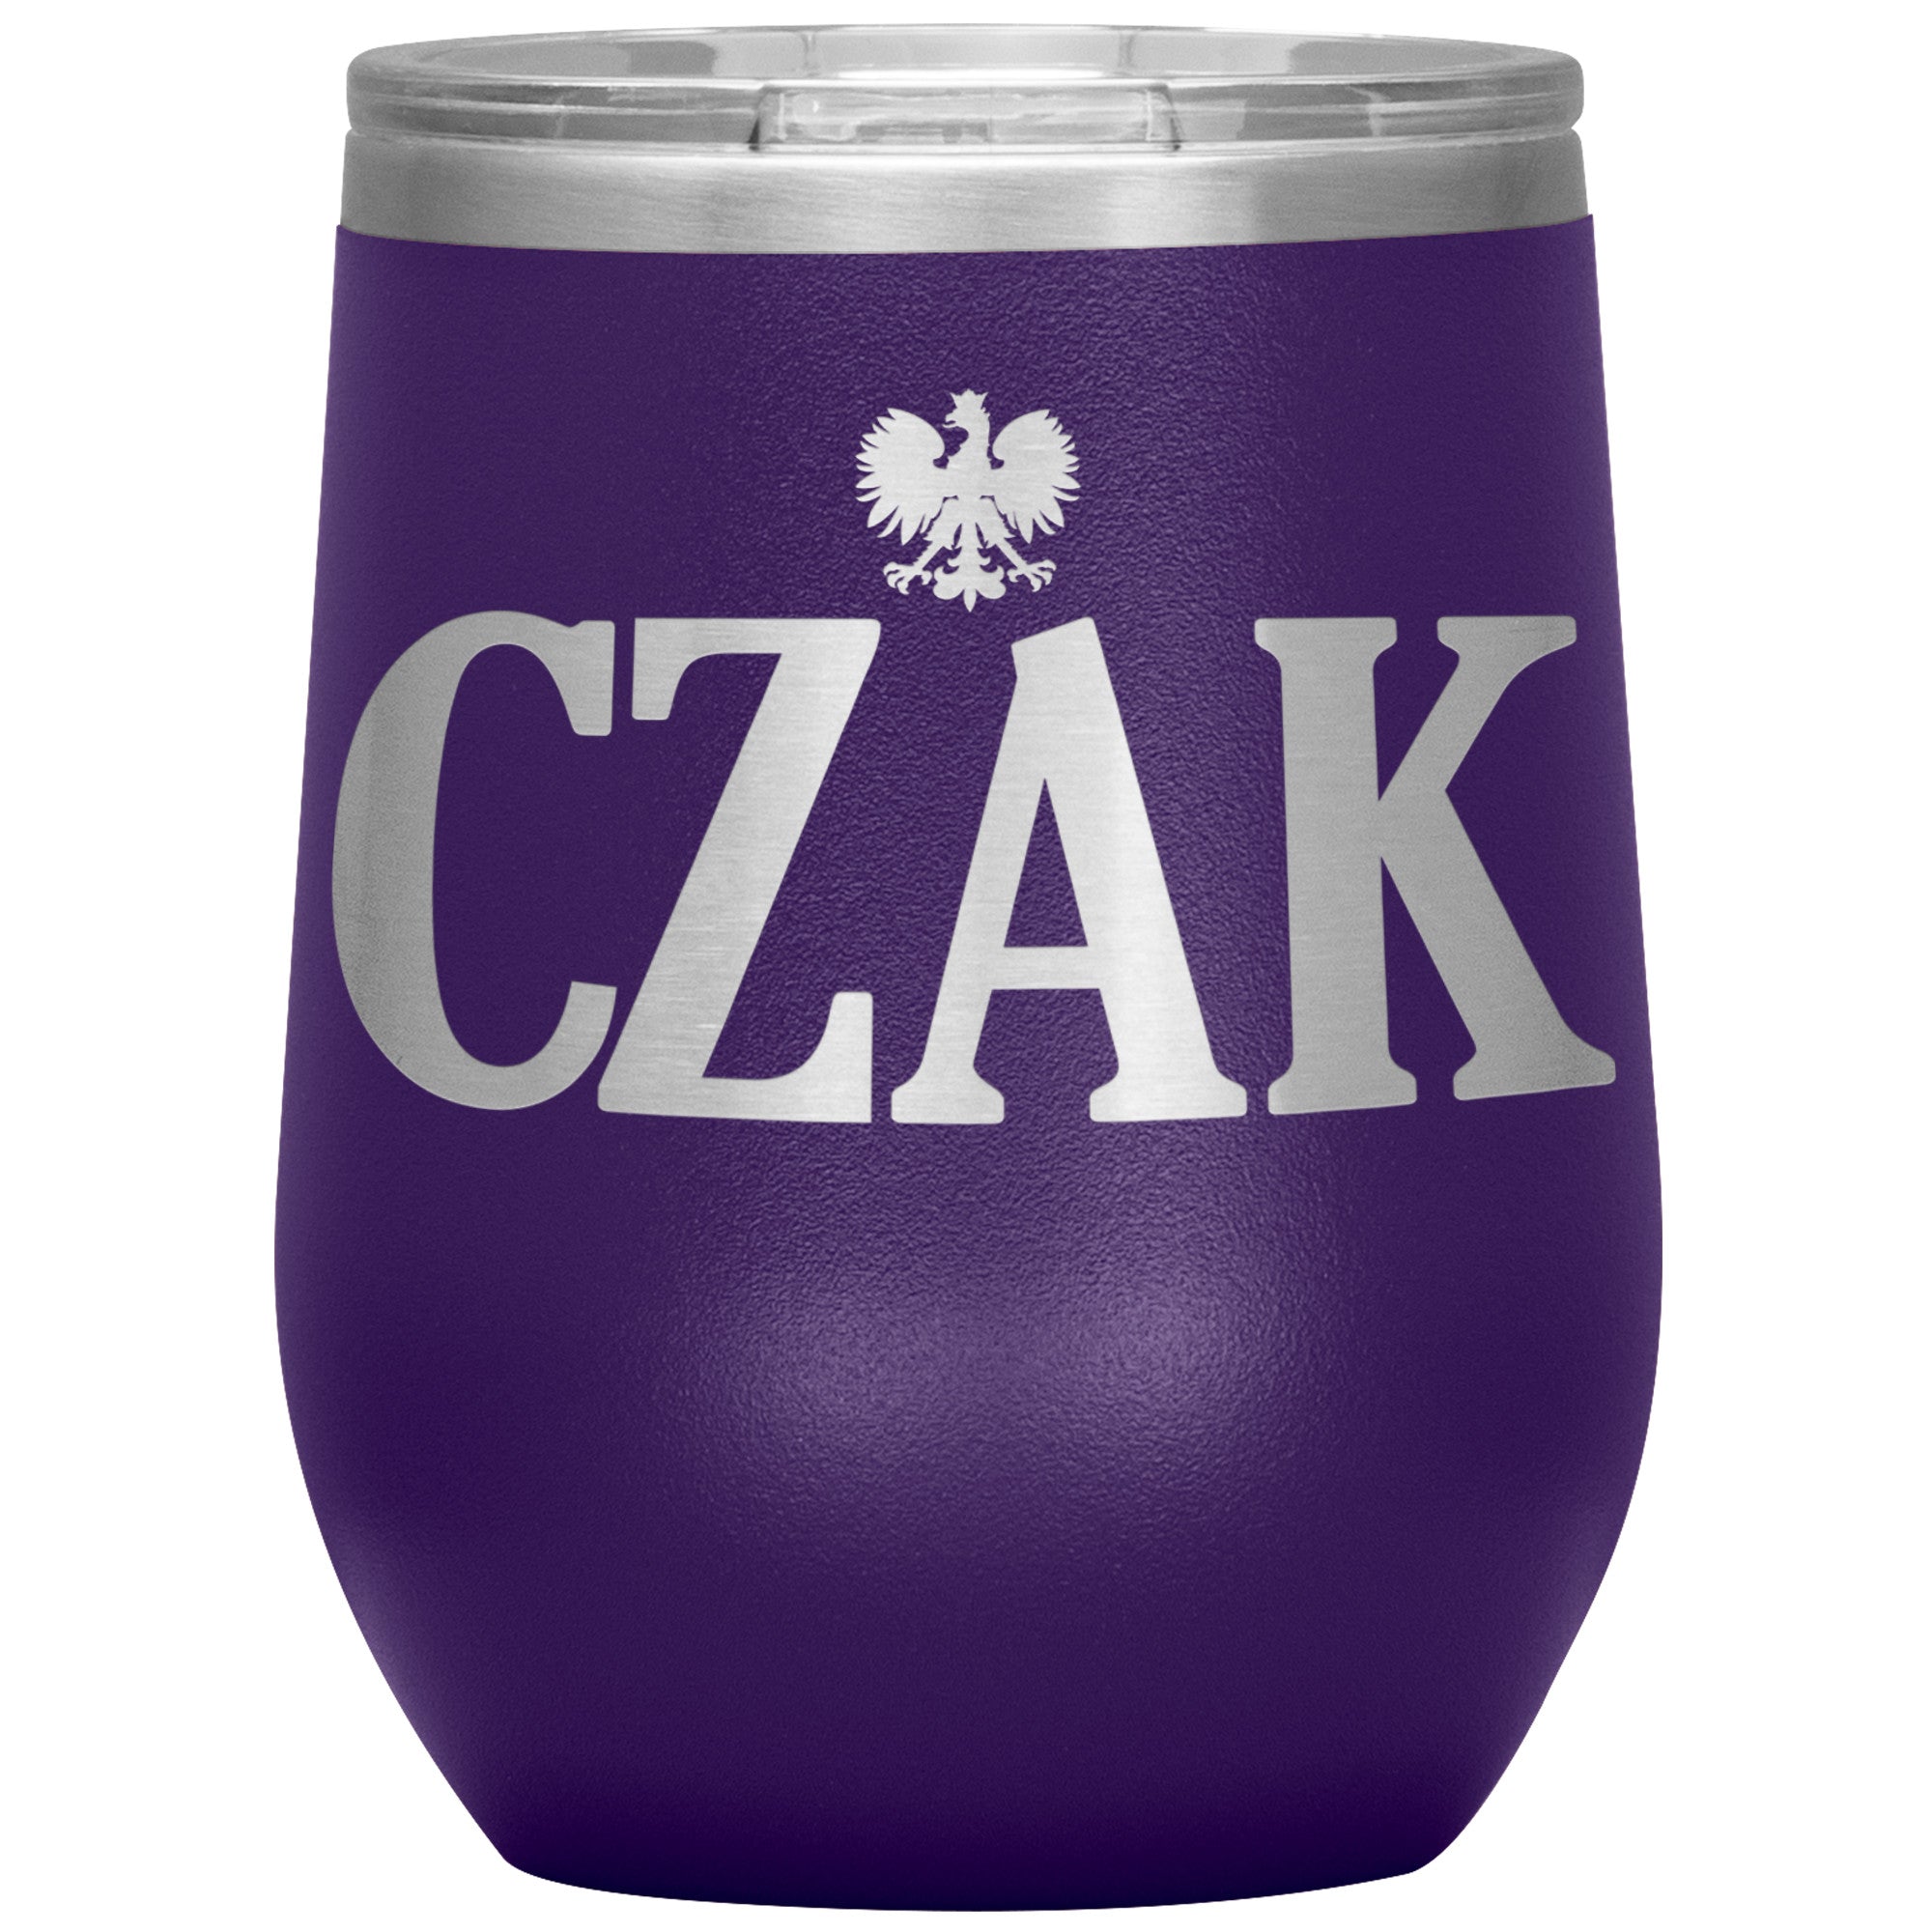 Polish Surnames Ending In CZAK Insulated Wine Tumbler Tumblers teelaunch Purple  